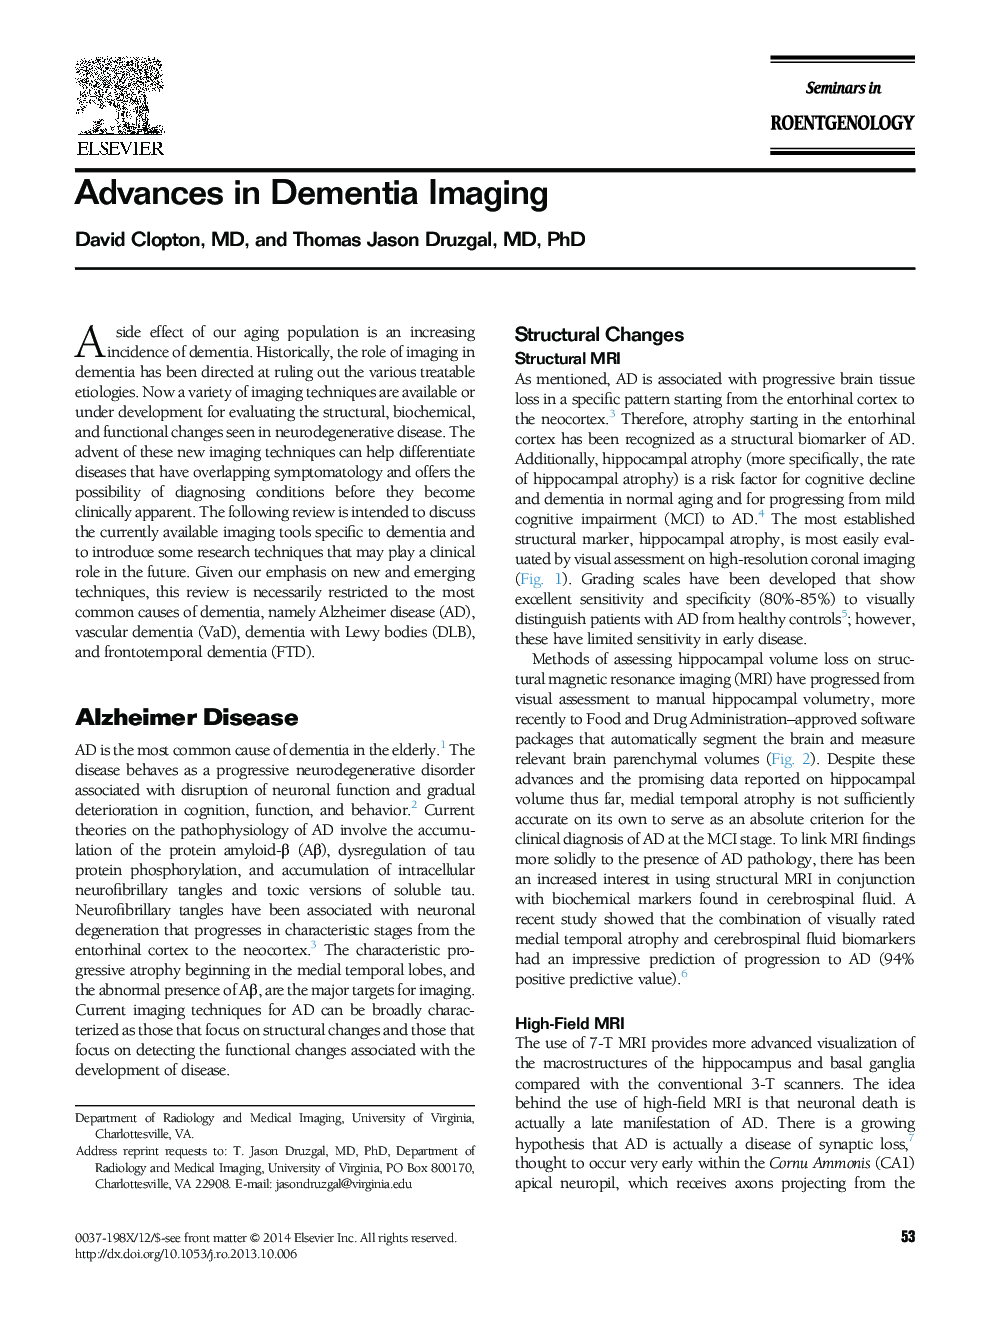 Advances in Dementia Imaging